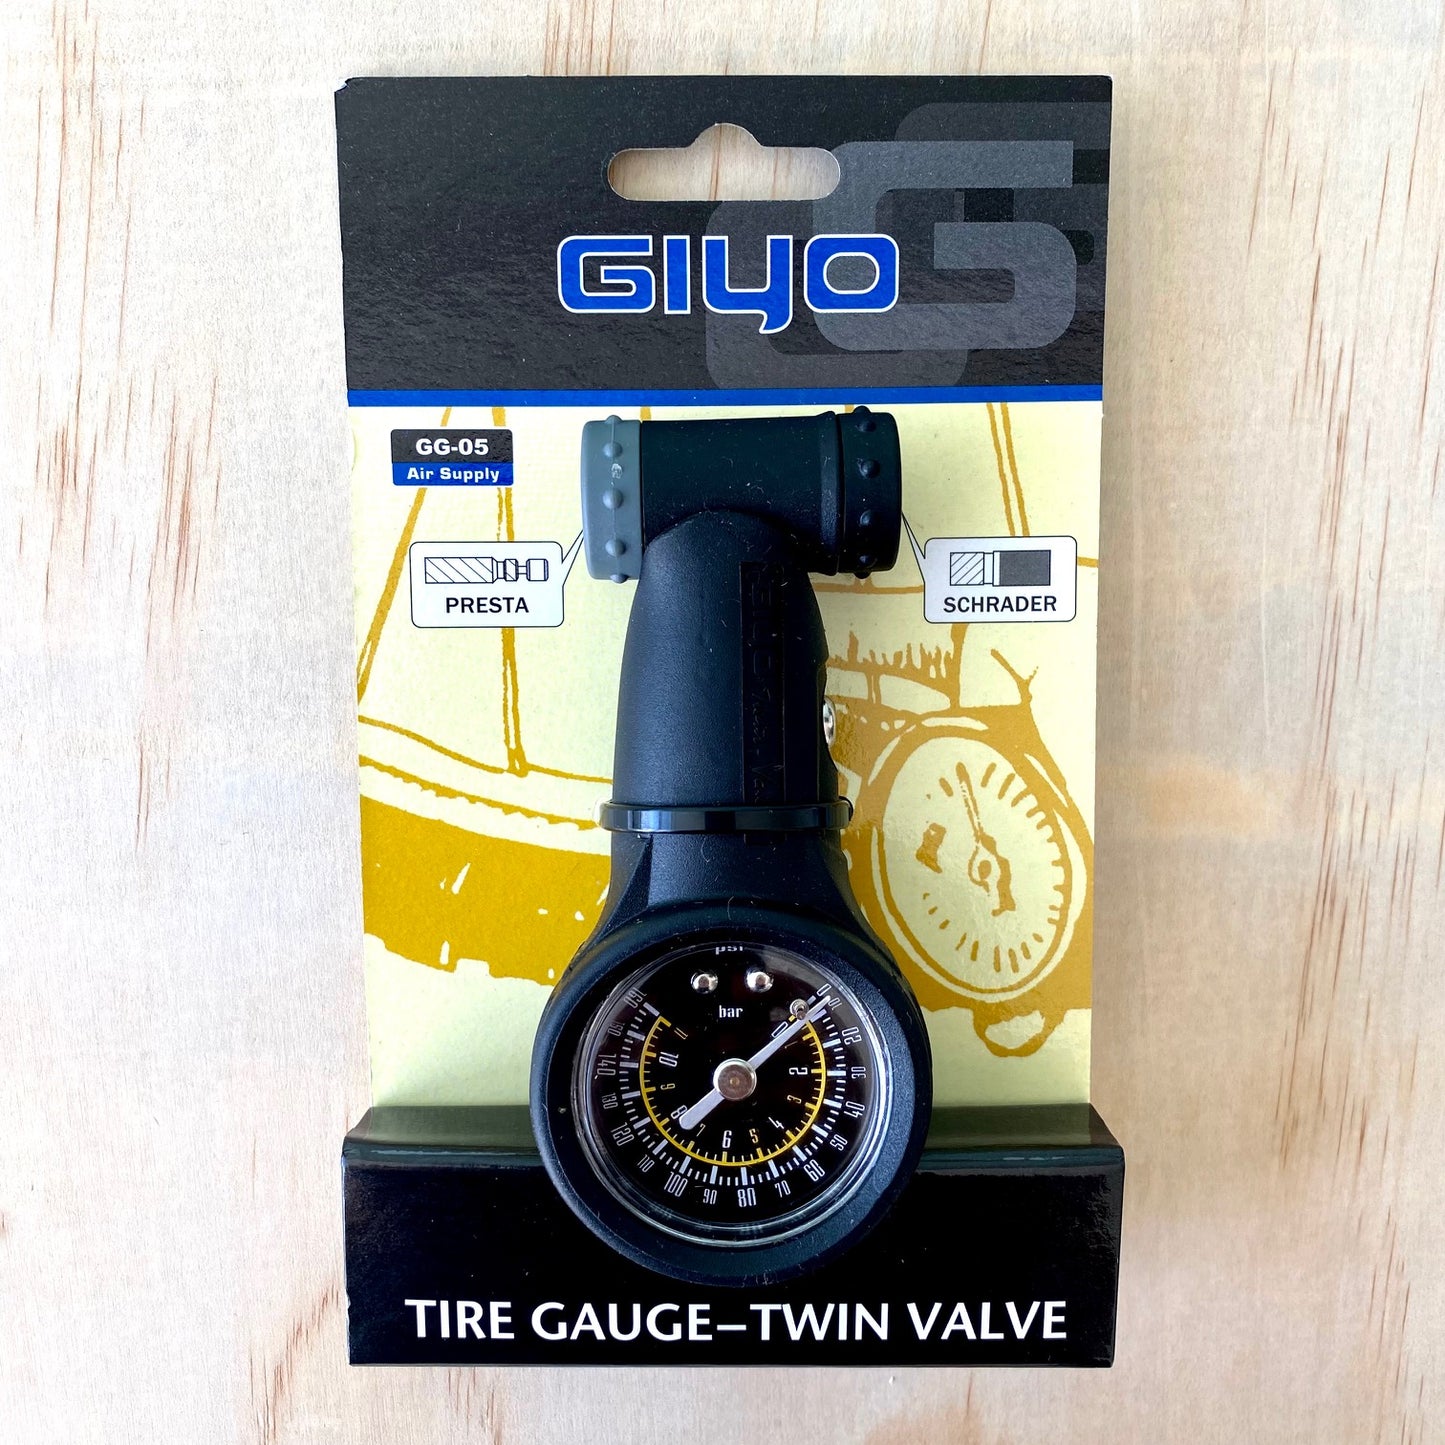 GIYO Bike Tyre Pressure Gauge - Twin Valve